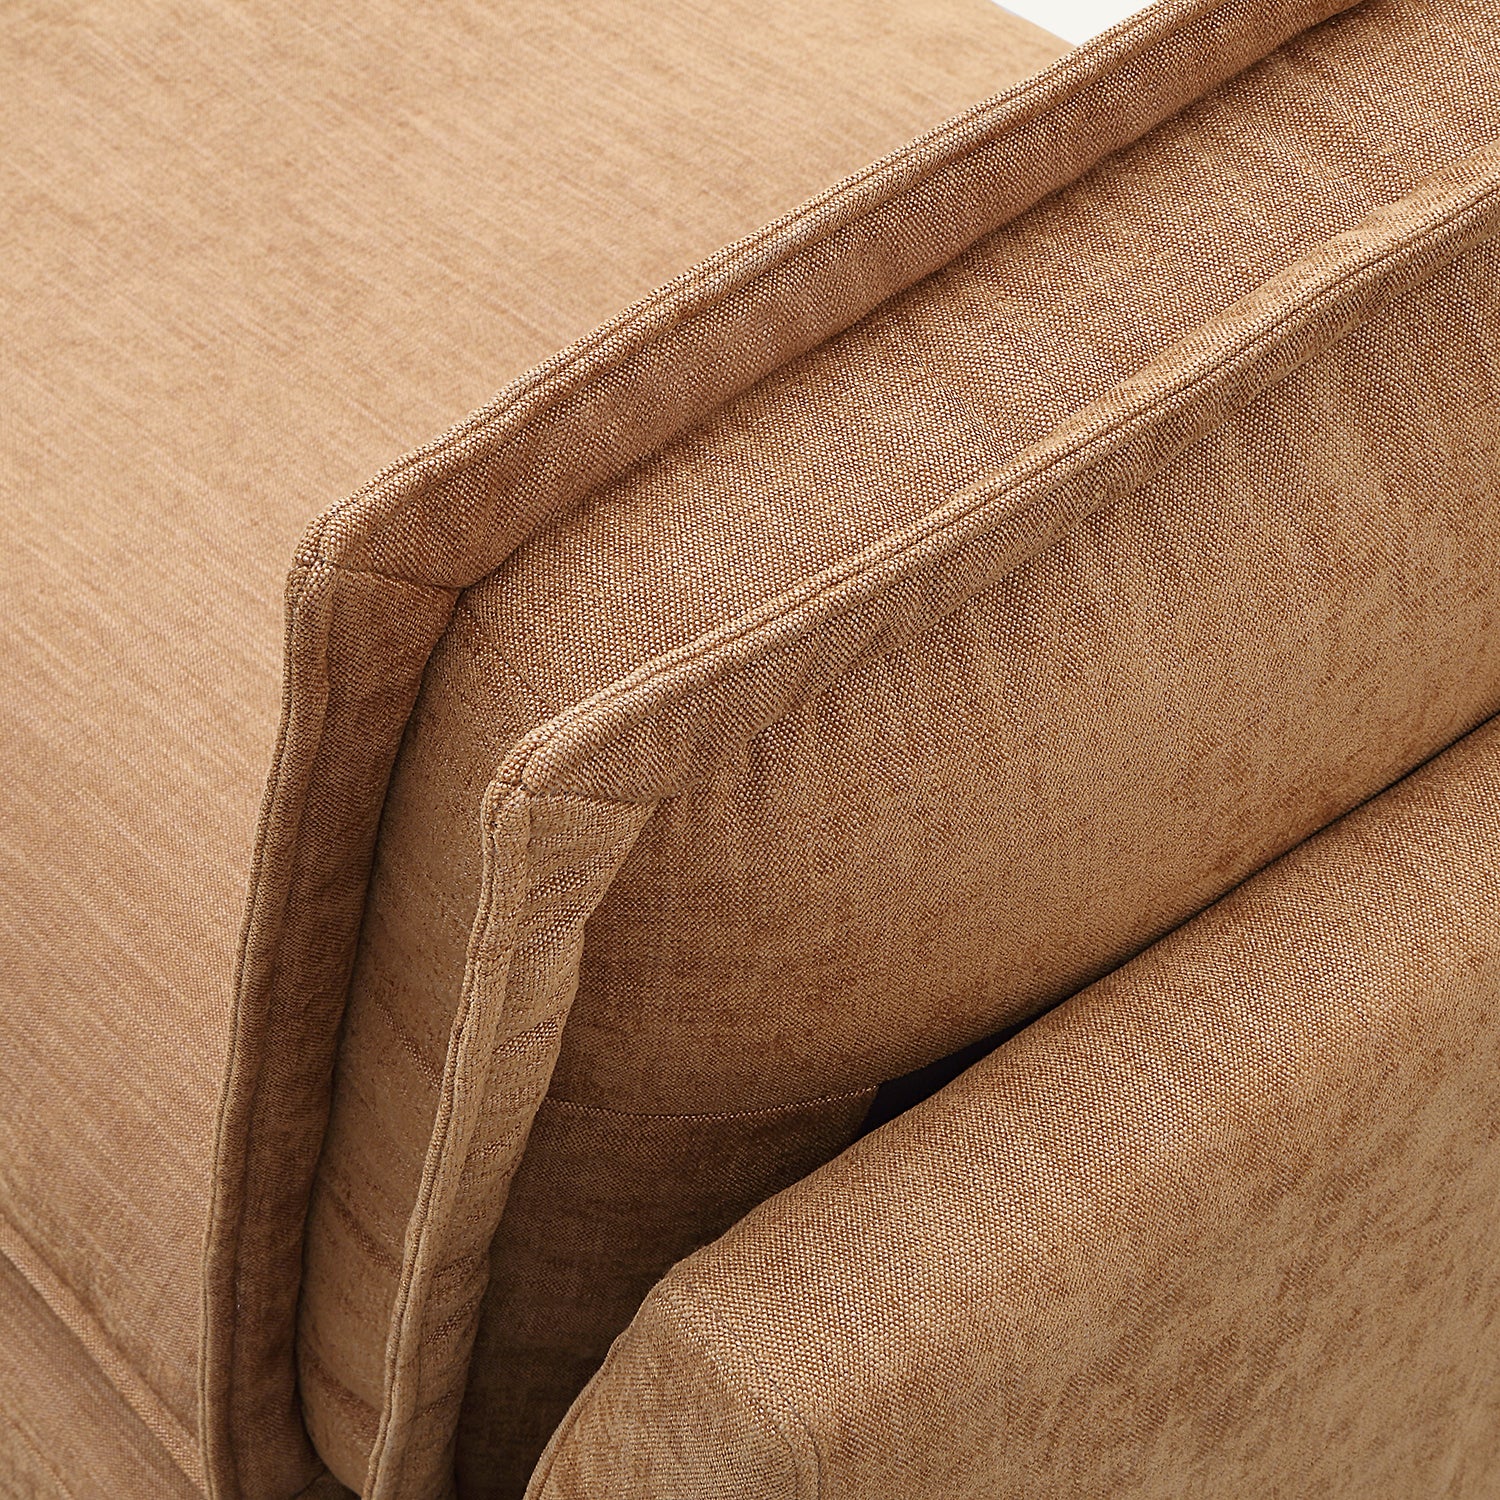 Stacked Tan Linen 5-Seat Sofa